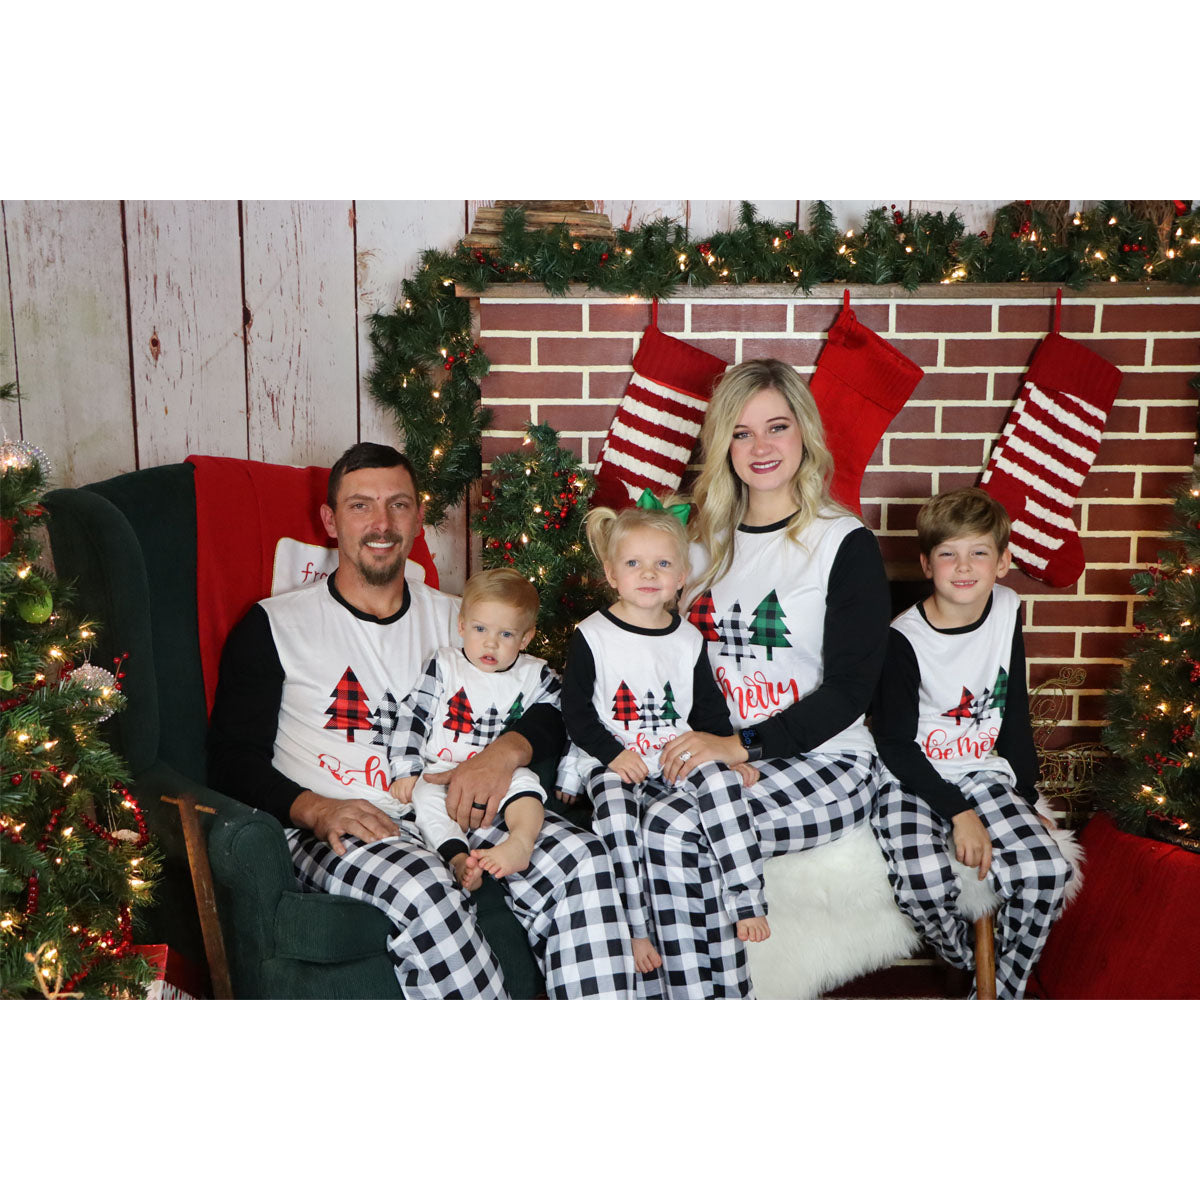 Oh Christmas Tree Oh Christmas Tree Pajama Set - Adult, Youth, & Baby - Southern Grace Creations